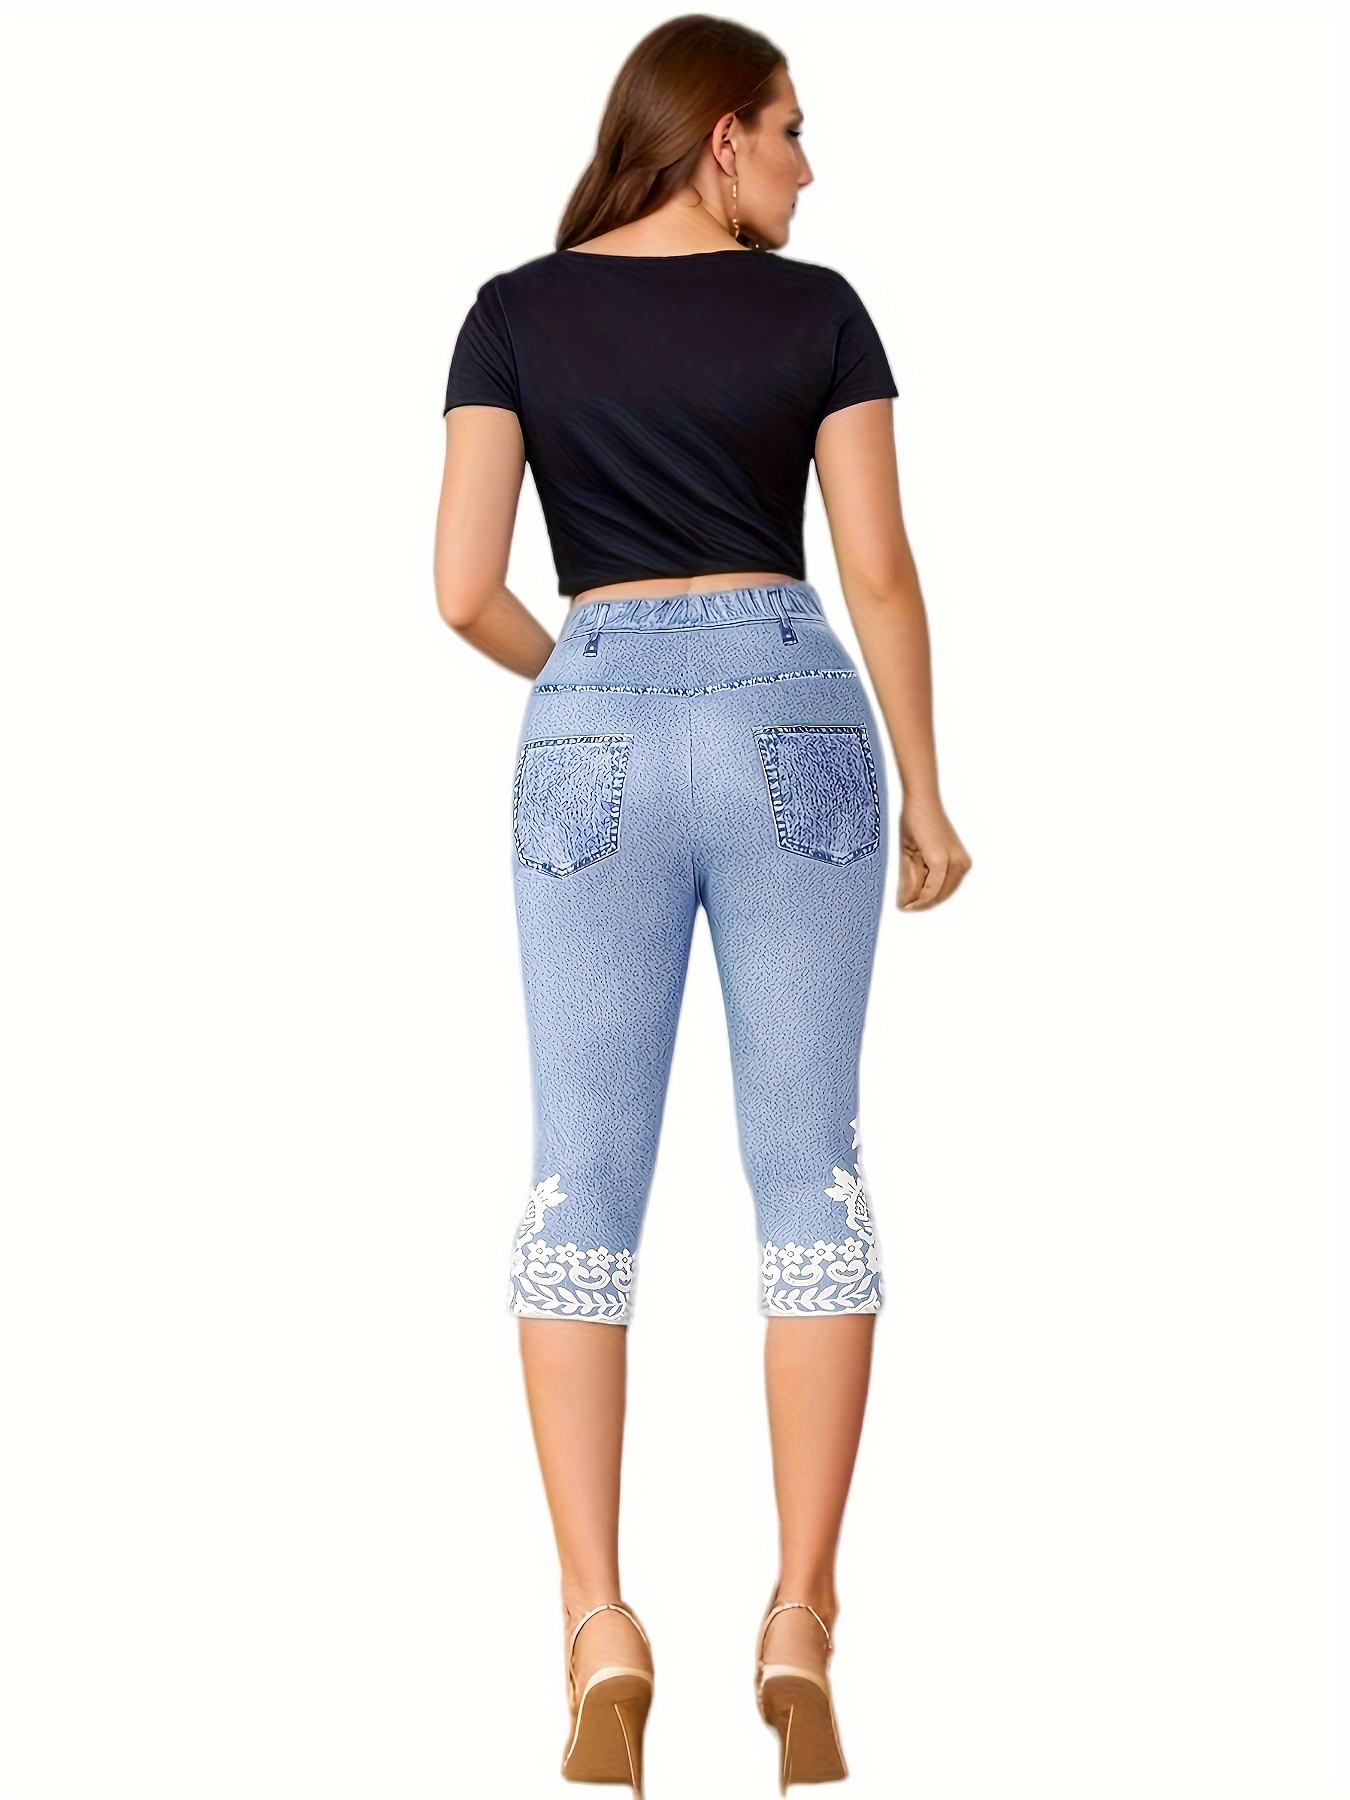 Girls' Pants, Leggings, & Jeans in Sizes 2-16